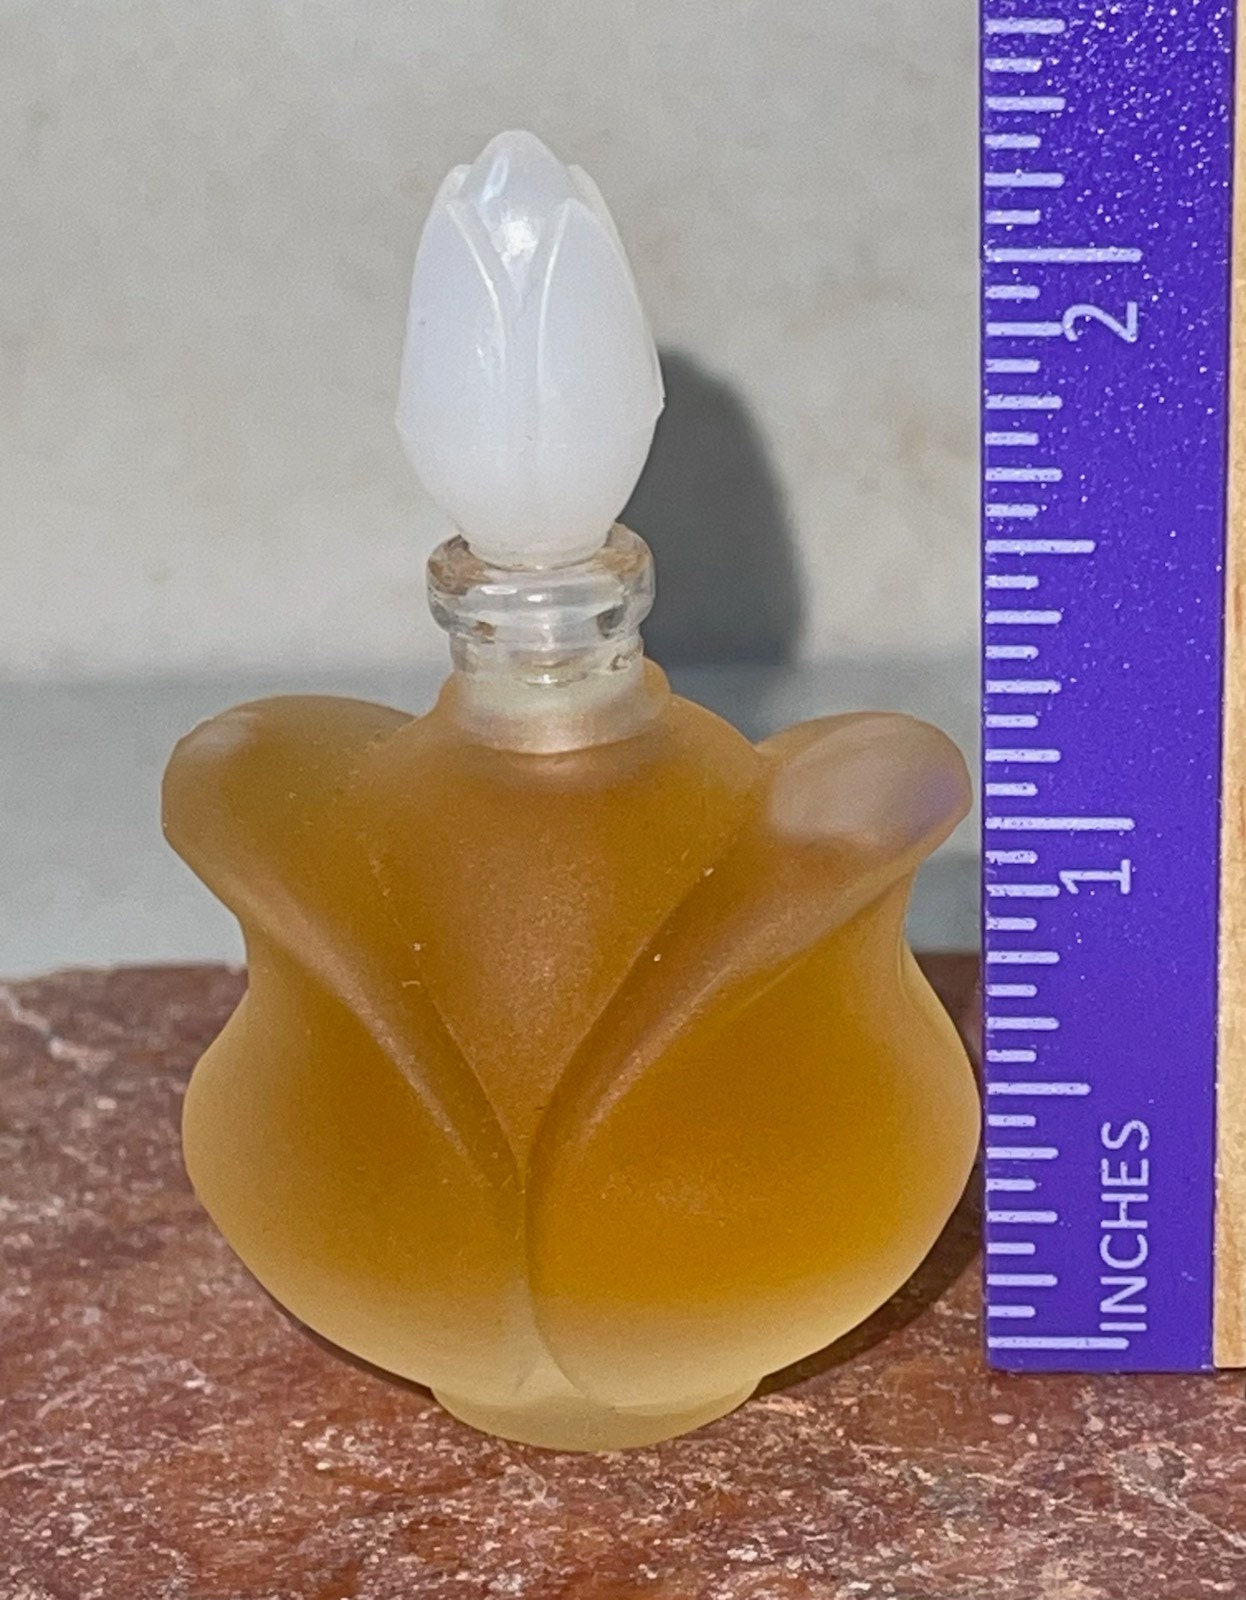 Vintage Ladies Lalique Miniature Perfume Bottles (3) - NWOB